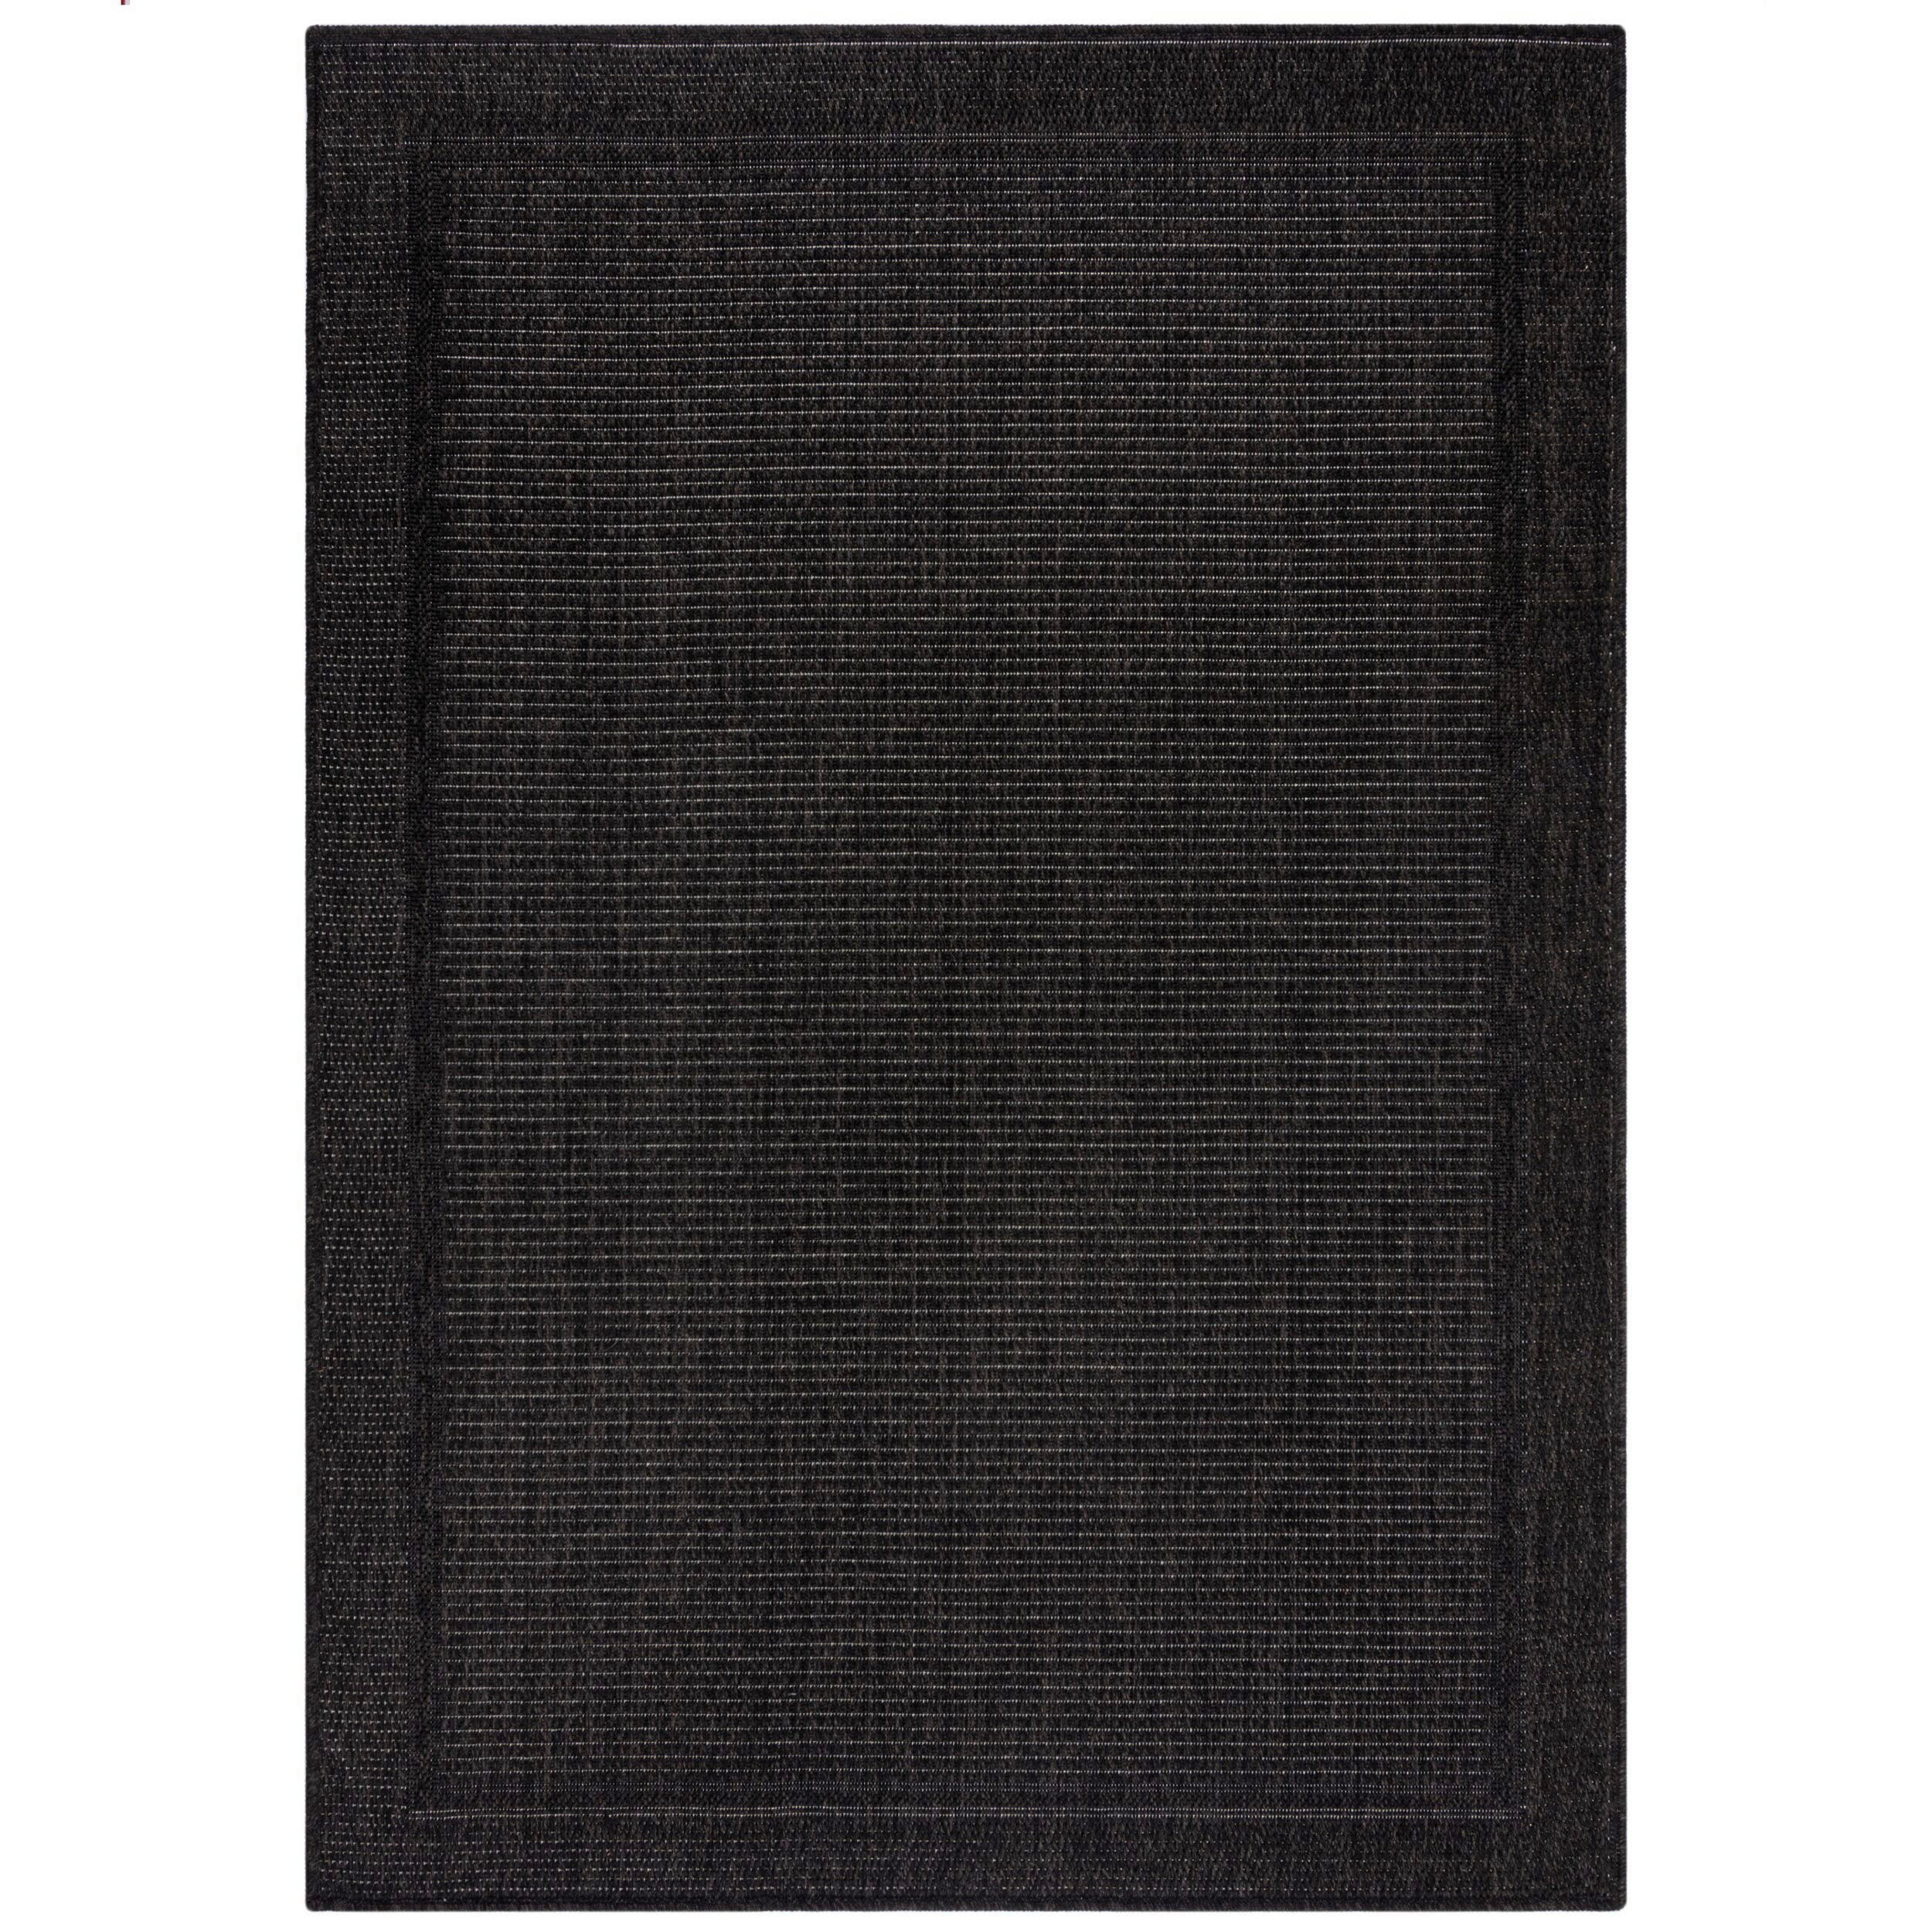 OUTDOORTEPPICH - Grau, Basics, Textil (160/230cm)